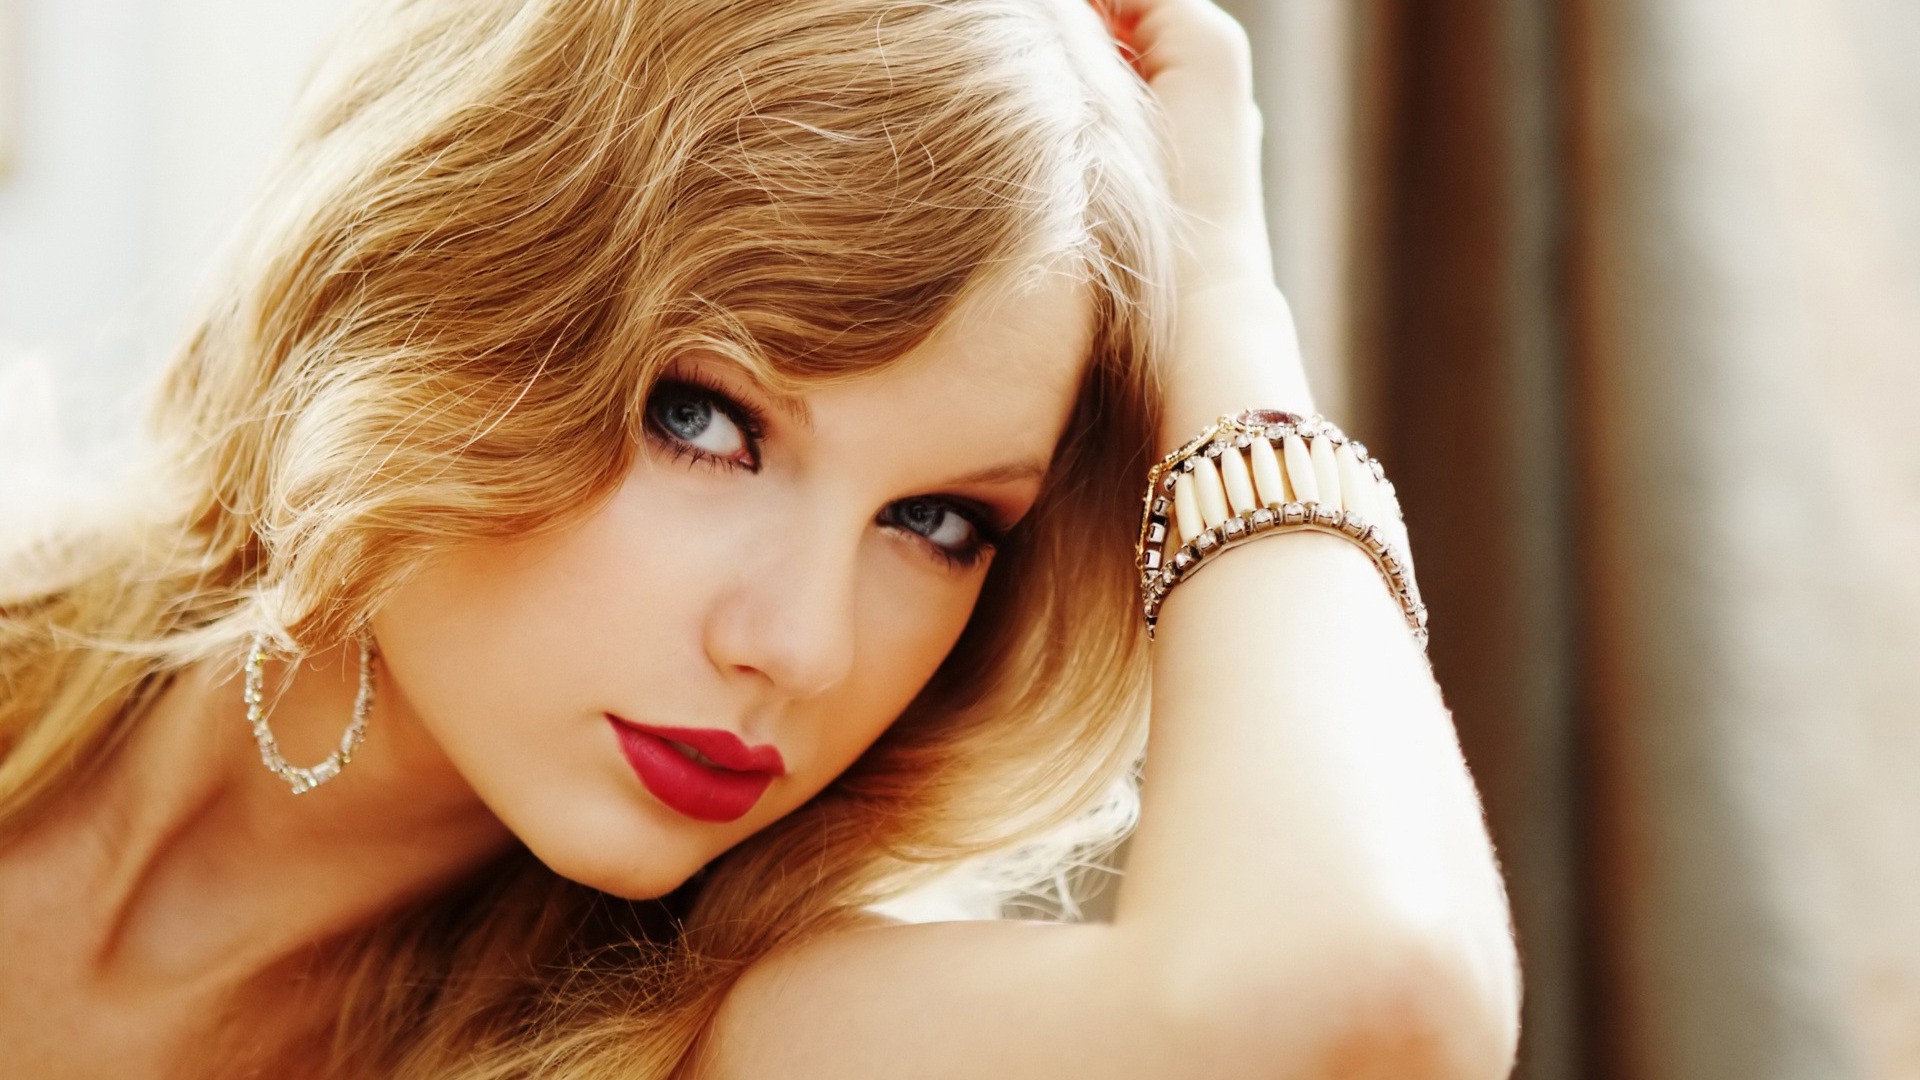 Taylor Swift, Celebrity, Blonde, Singer, Blue Eyes, Women, Face